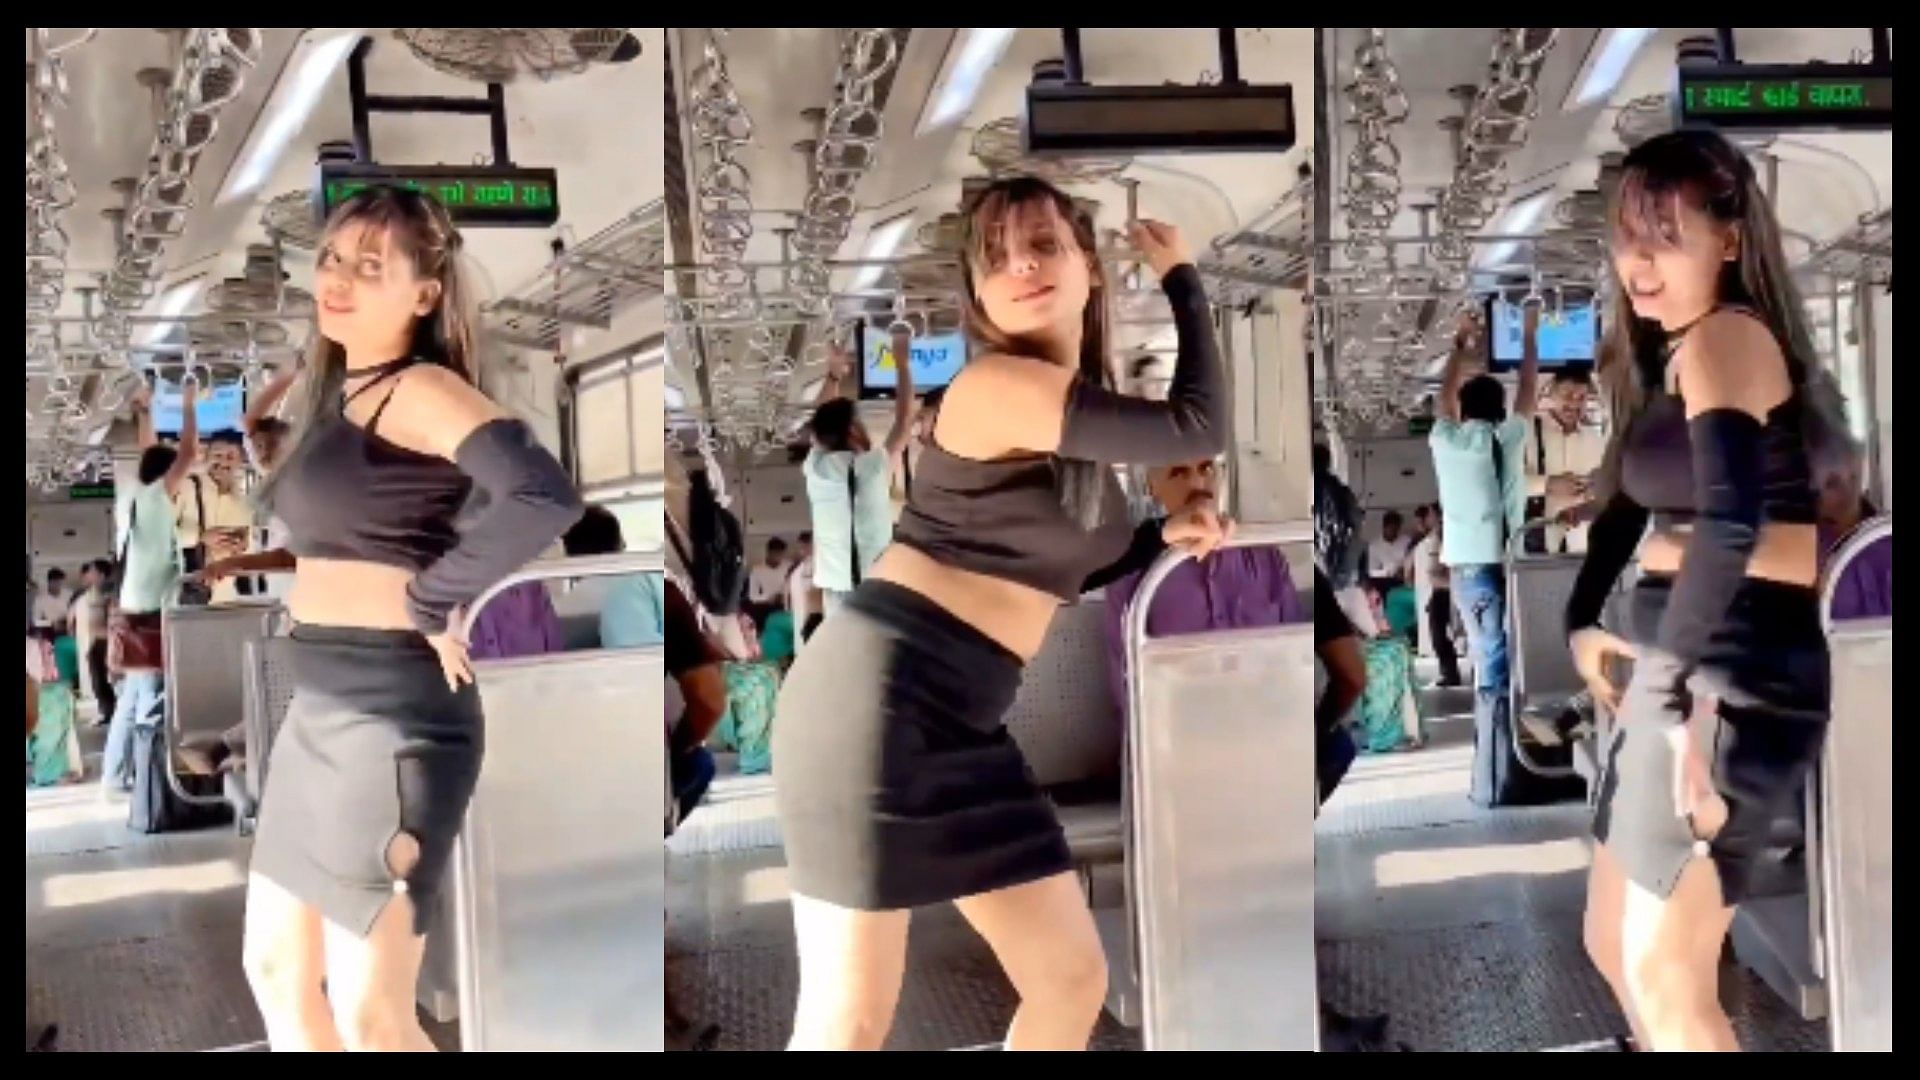 Girl seen dancing obscenely on bhojpuri song in mumbai local train video viral o social media